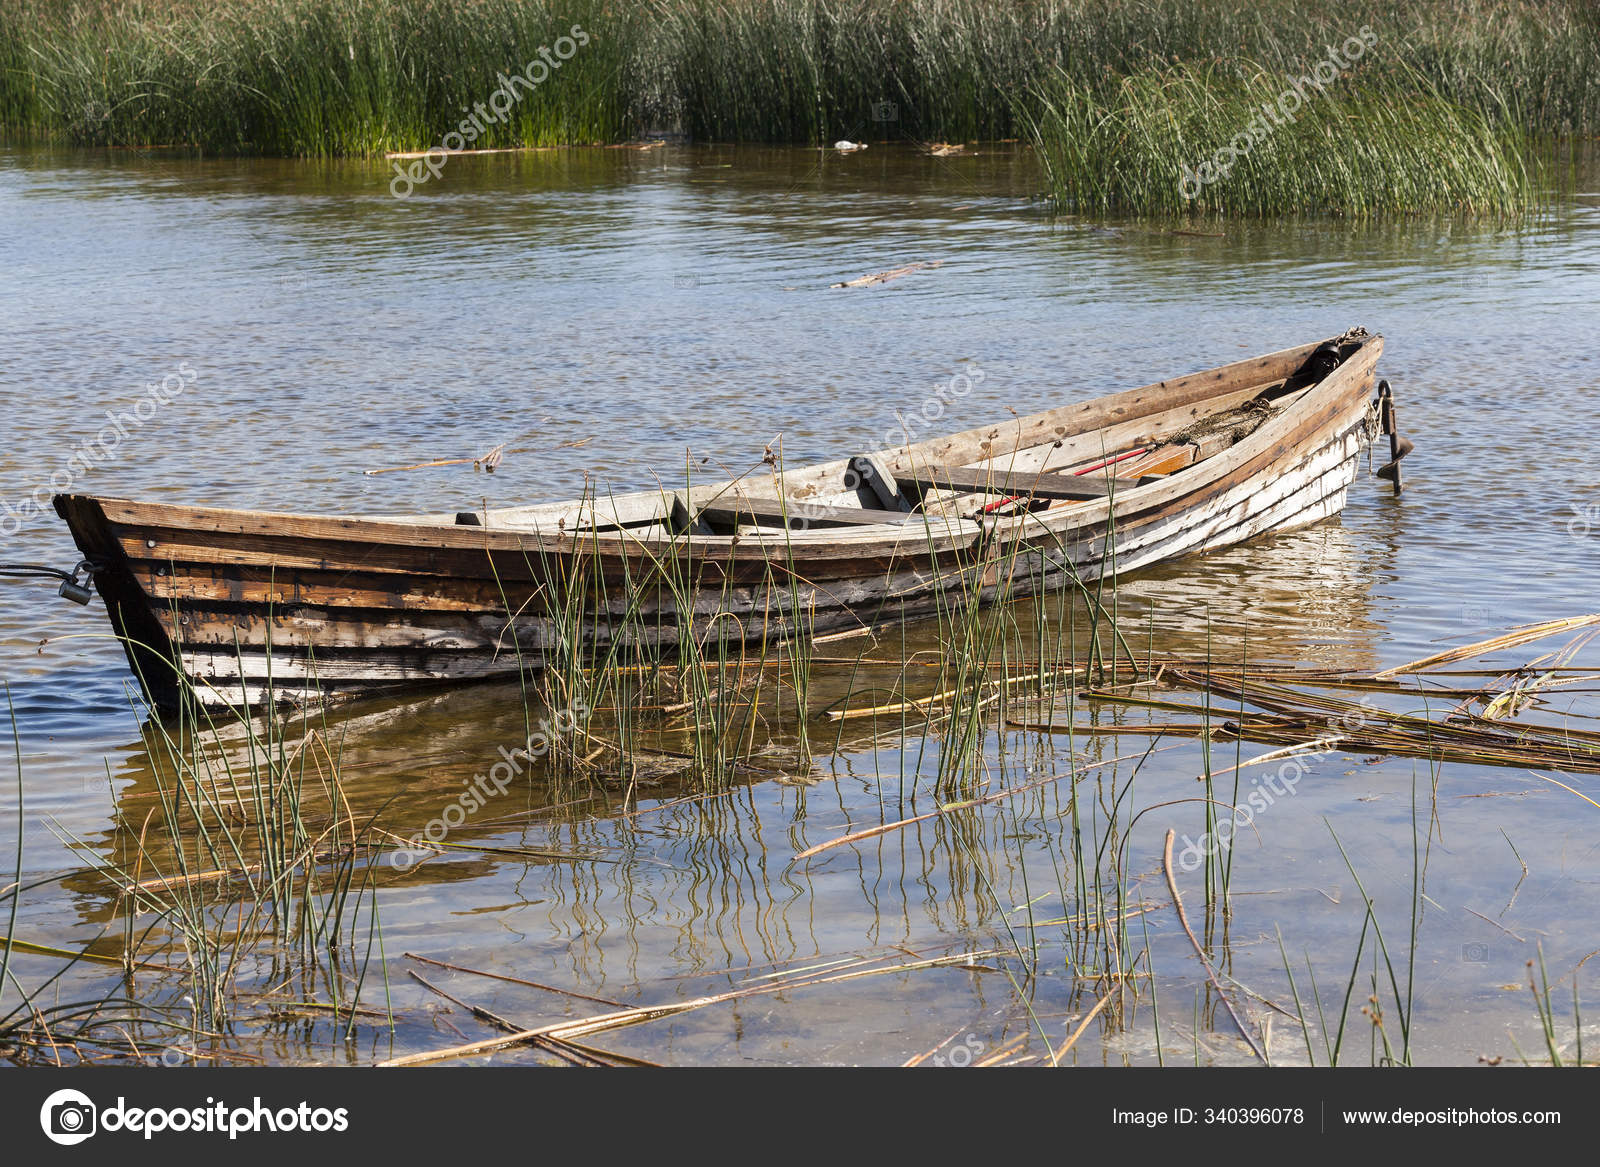 https://st3.depositphotos.com/29384342/34039/i/1600/depositphotos_340396078-stock-photo-old-wooden-boat-lake-used.jpg